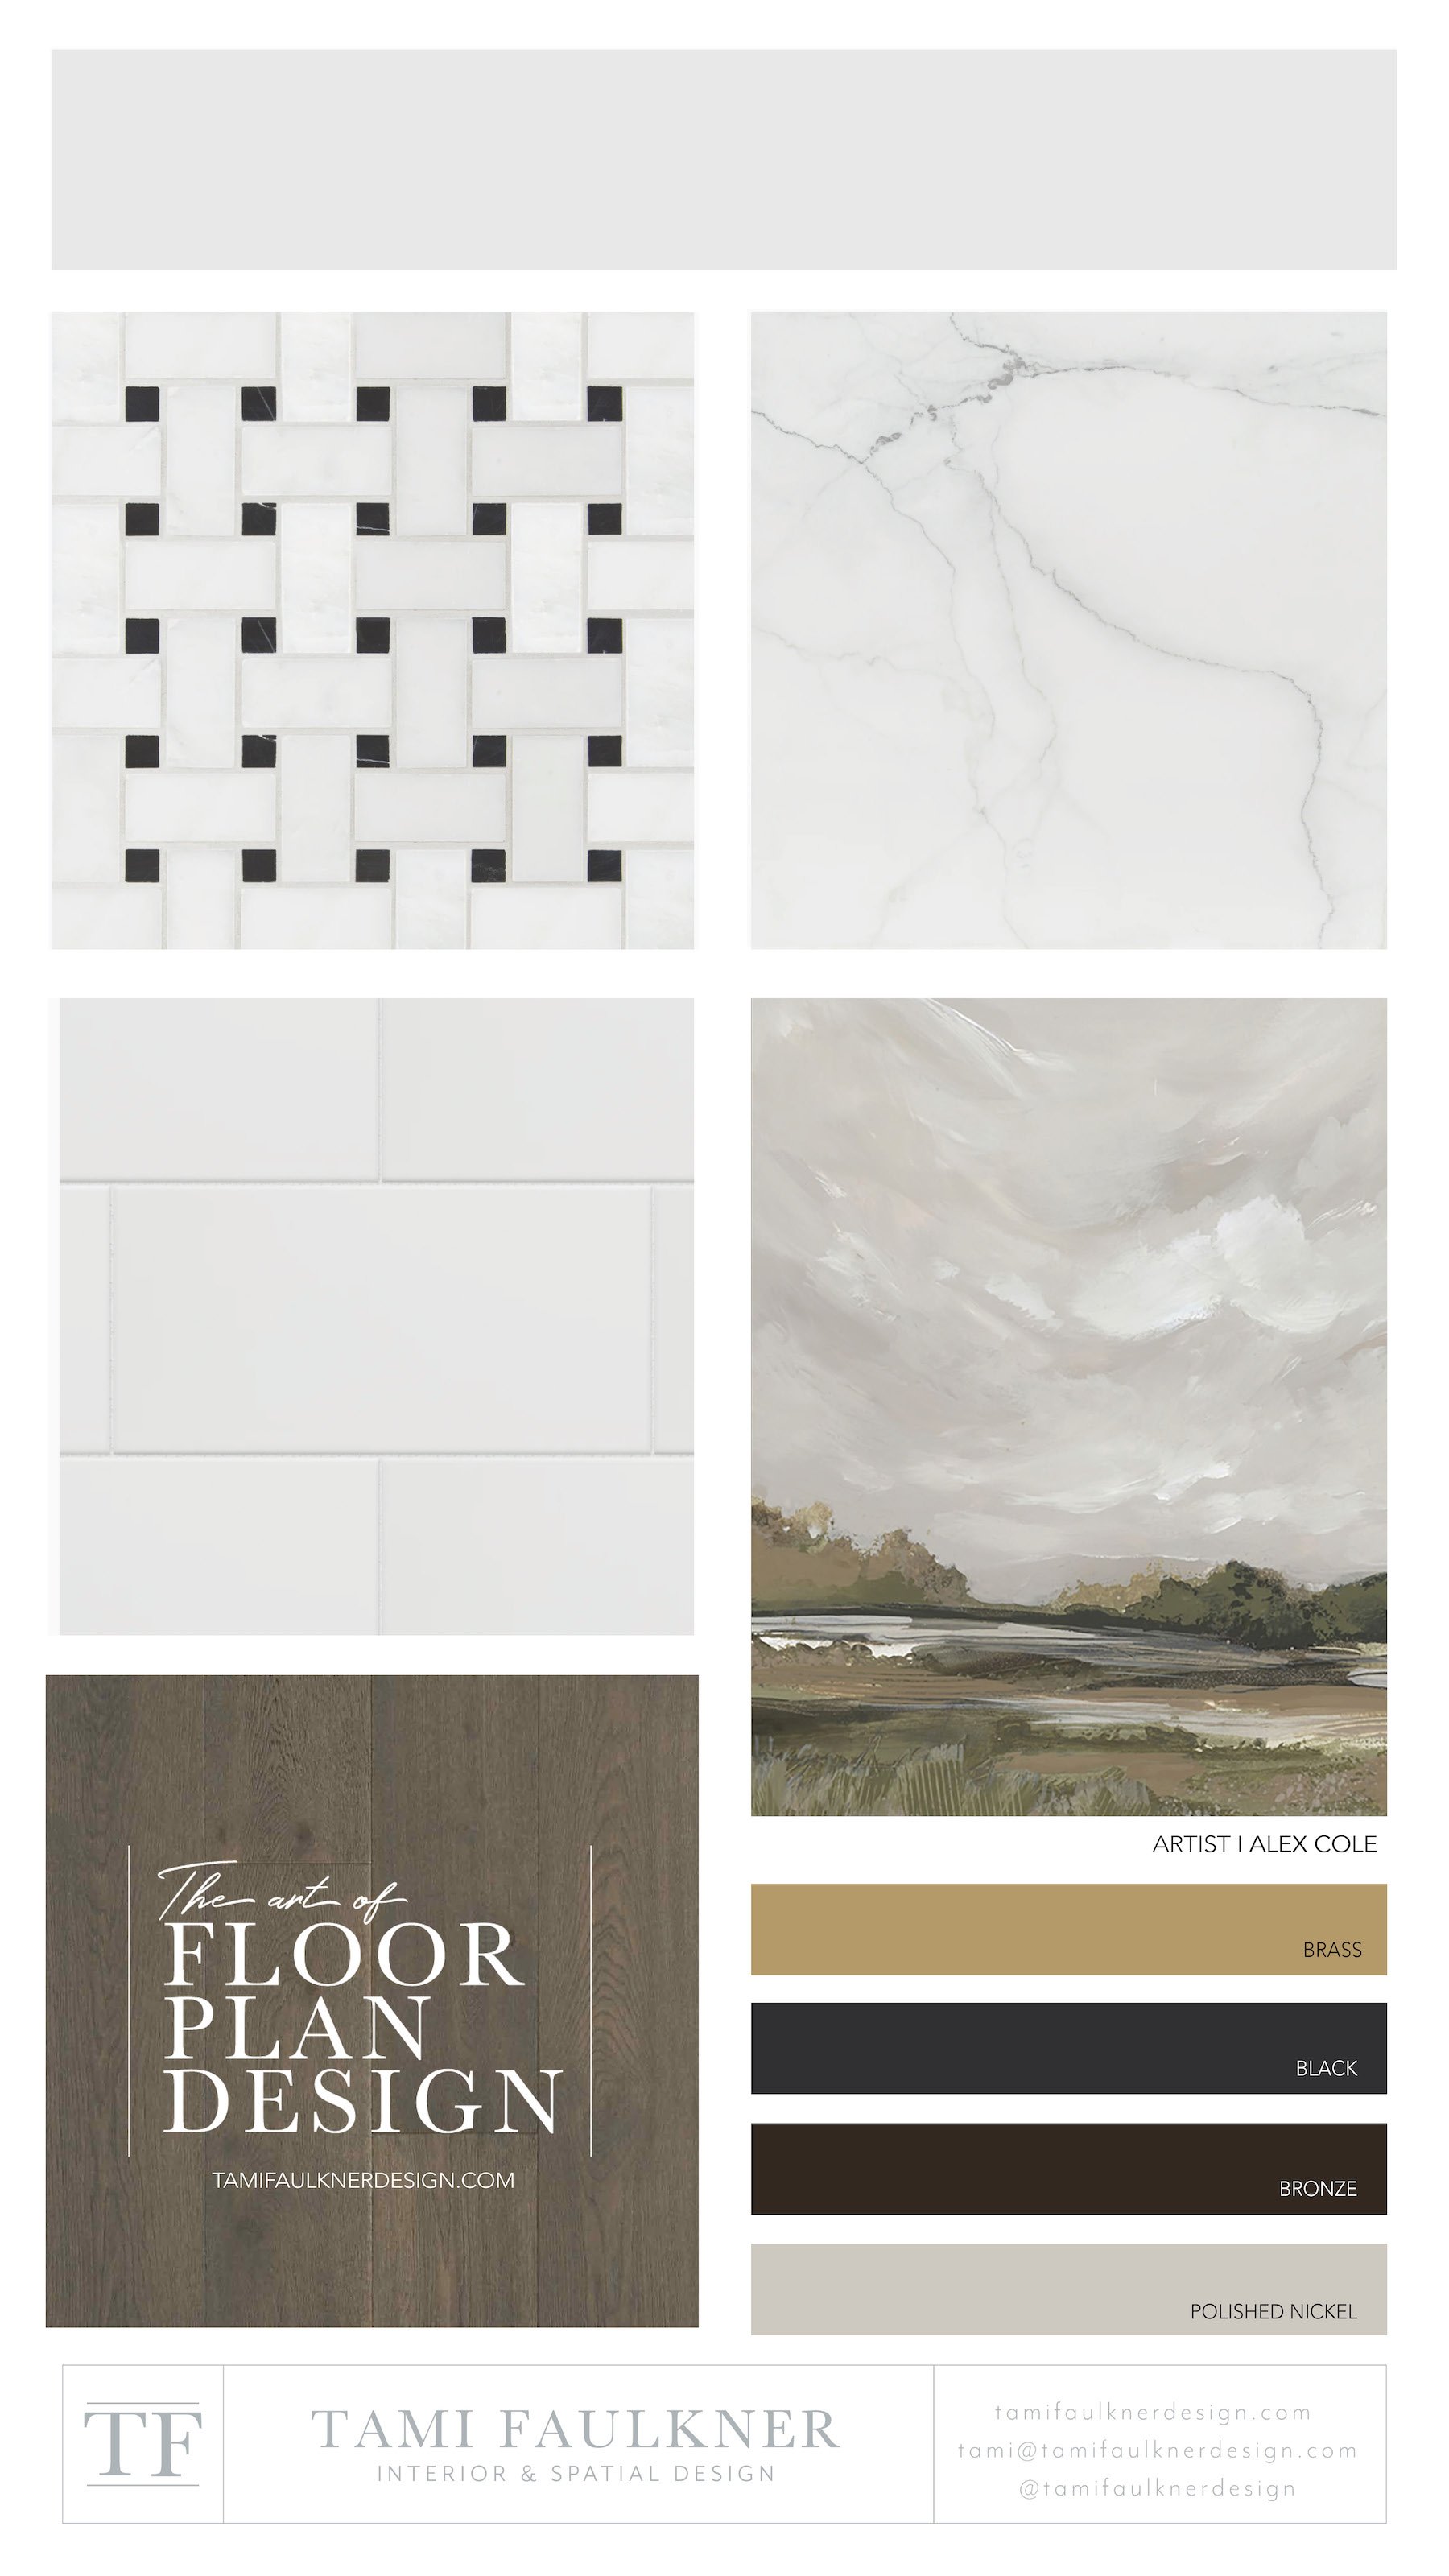 Floorplanner - blog  Introducing a simpler, more organized